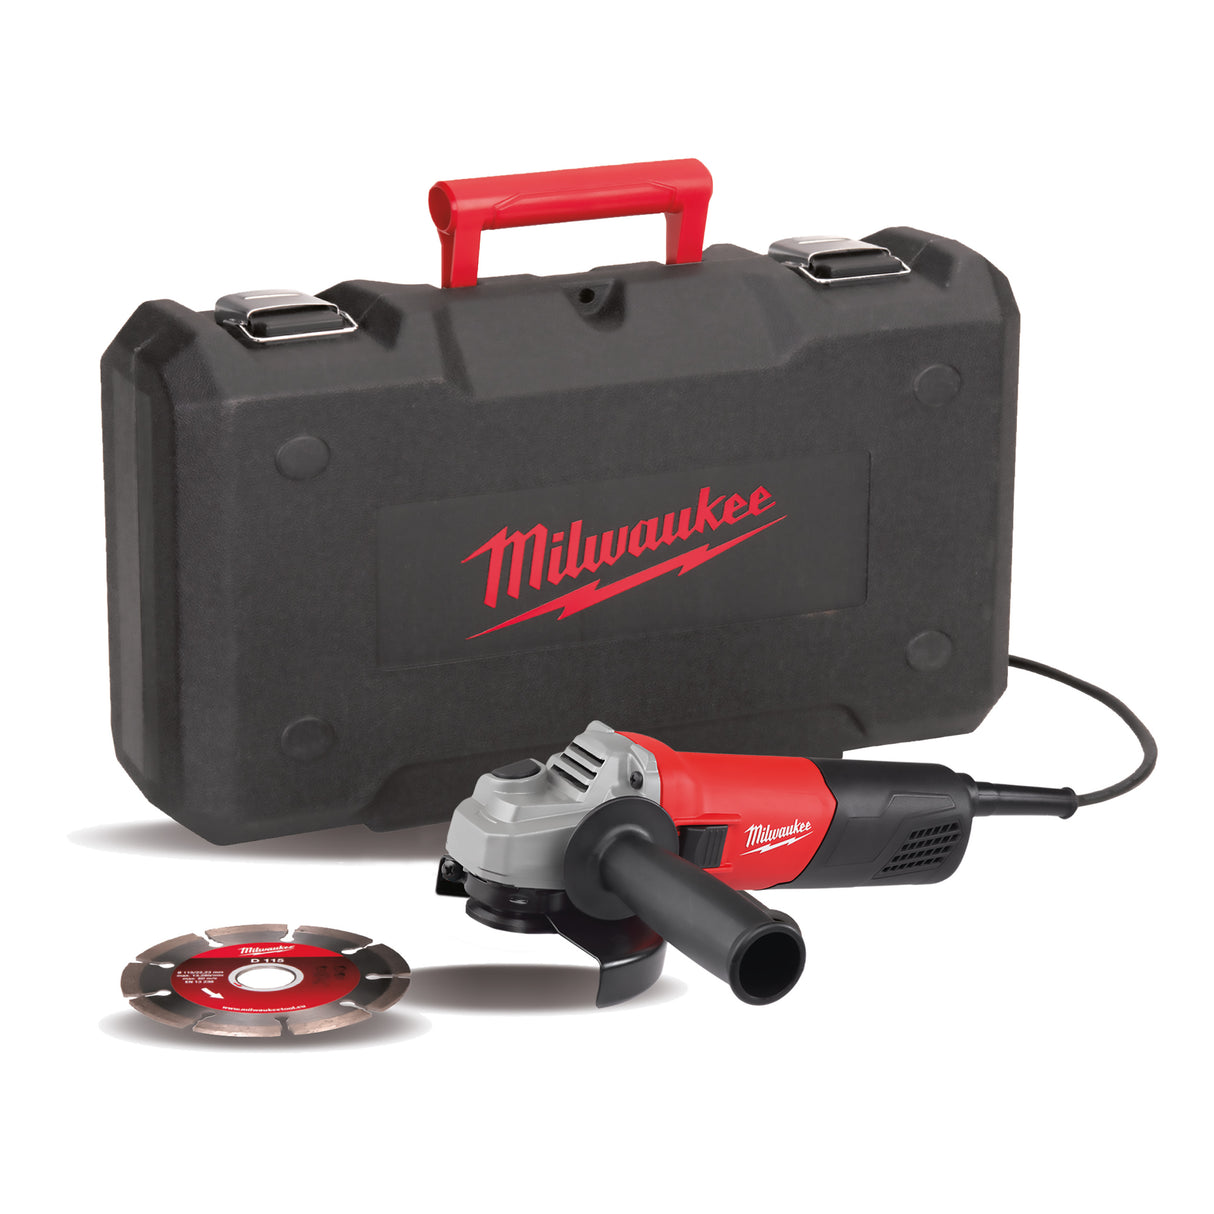 Milwaukee Winkelschleifer AG800-115ED-SET 4933451281 roteswerkzeug